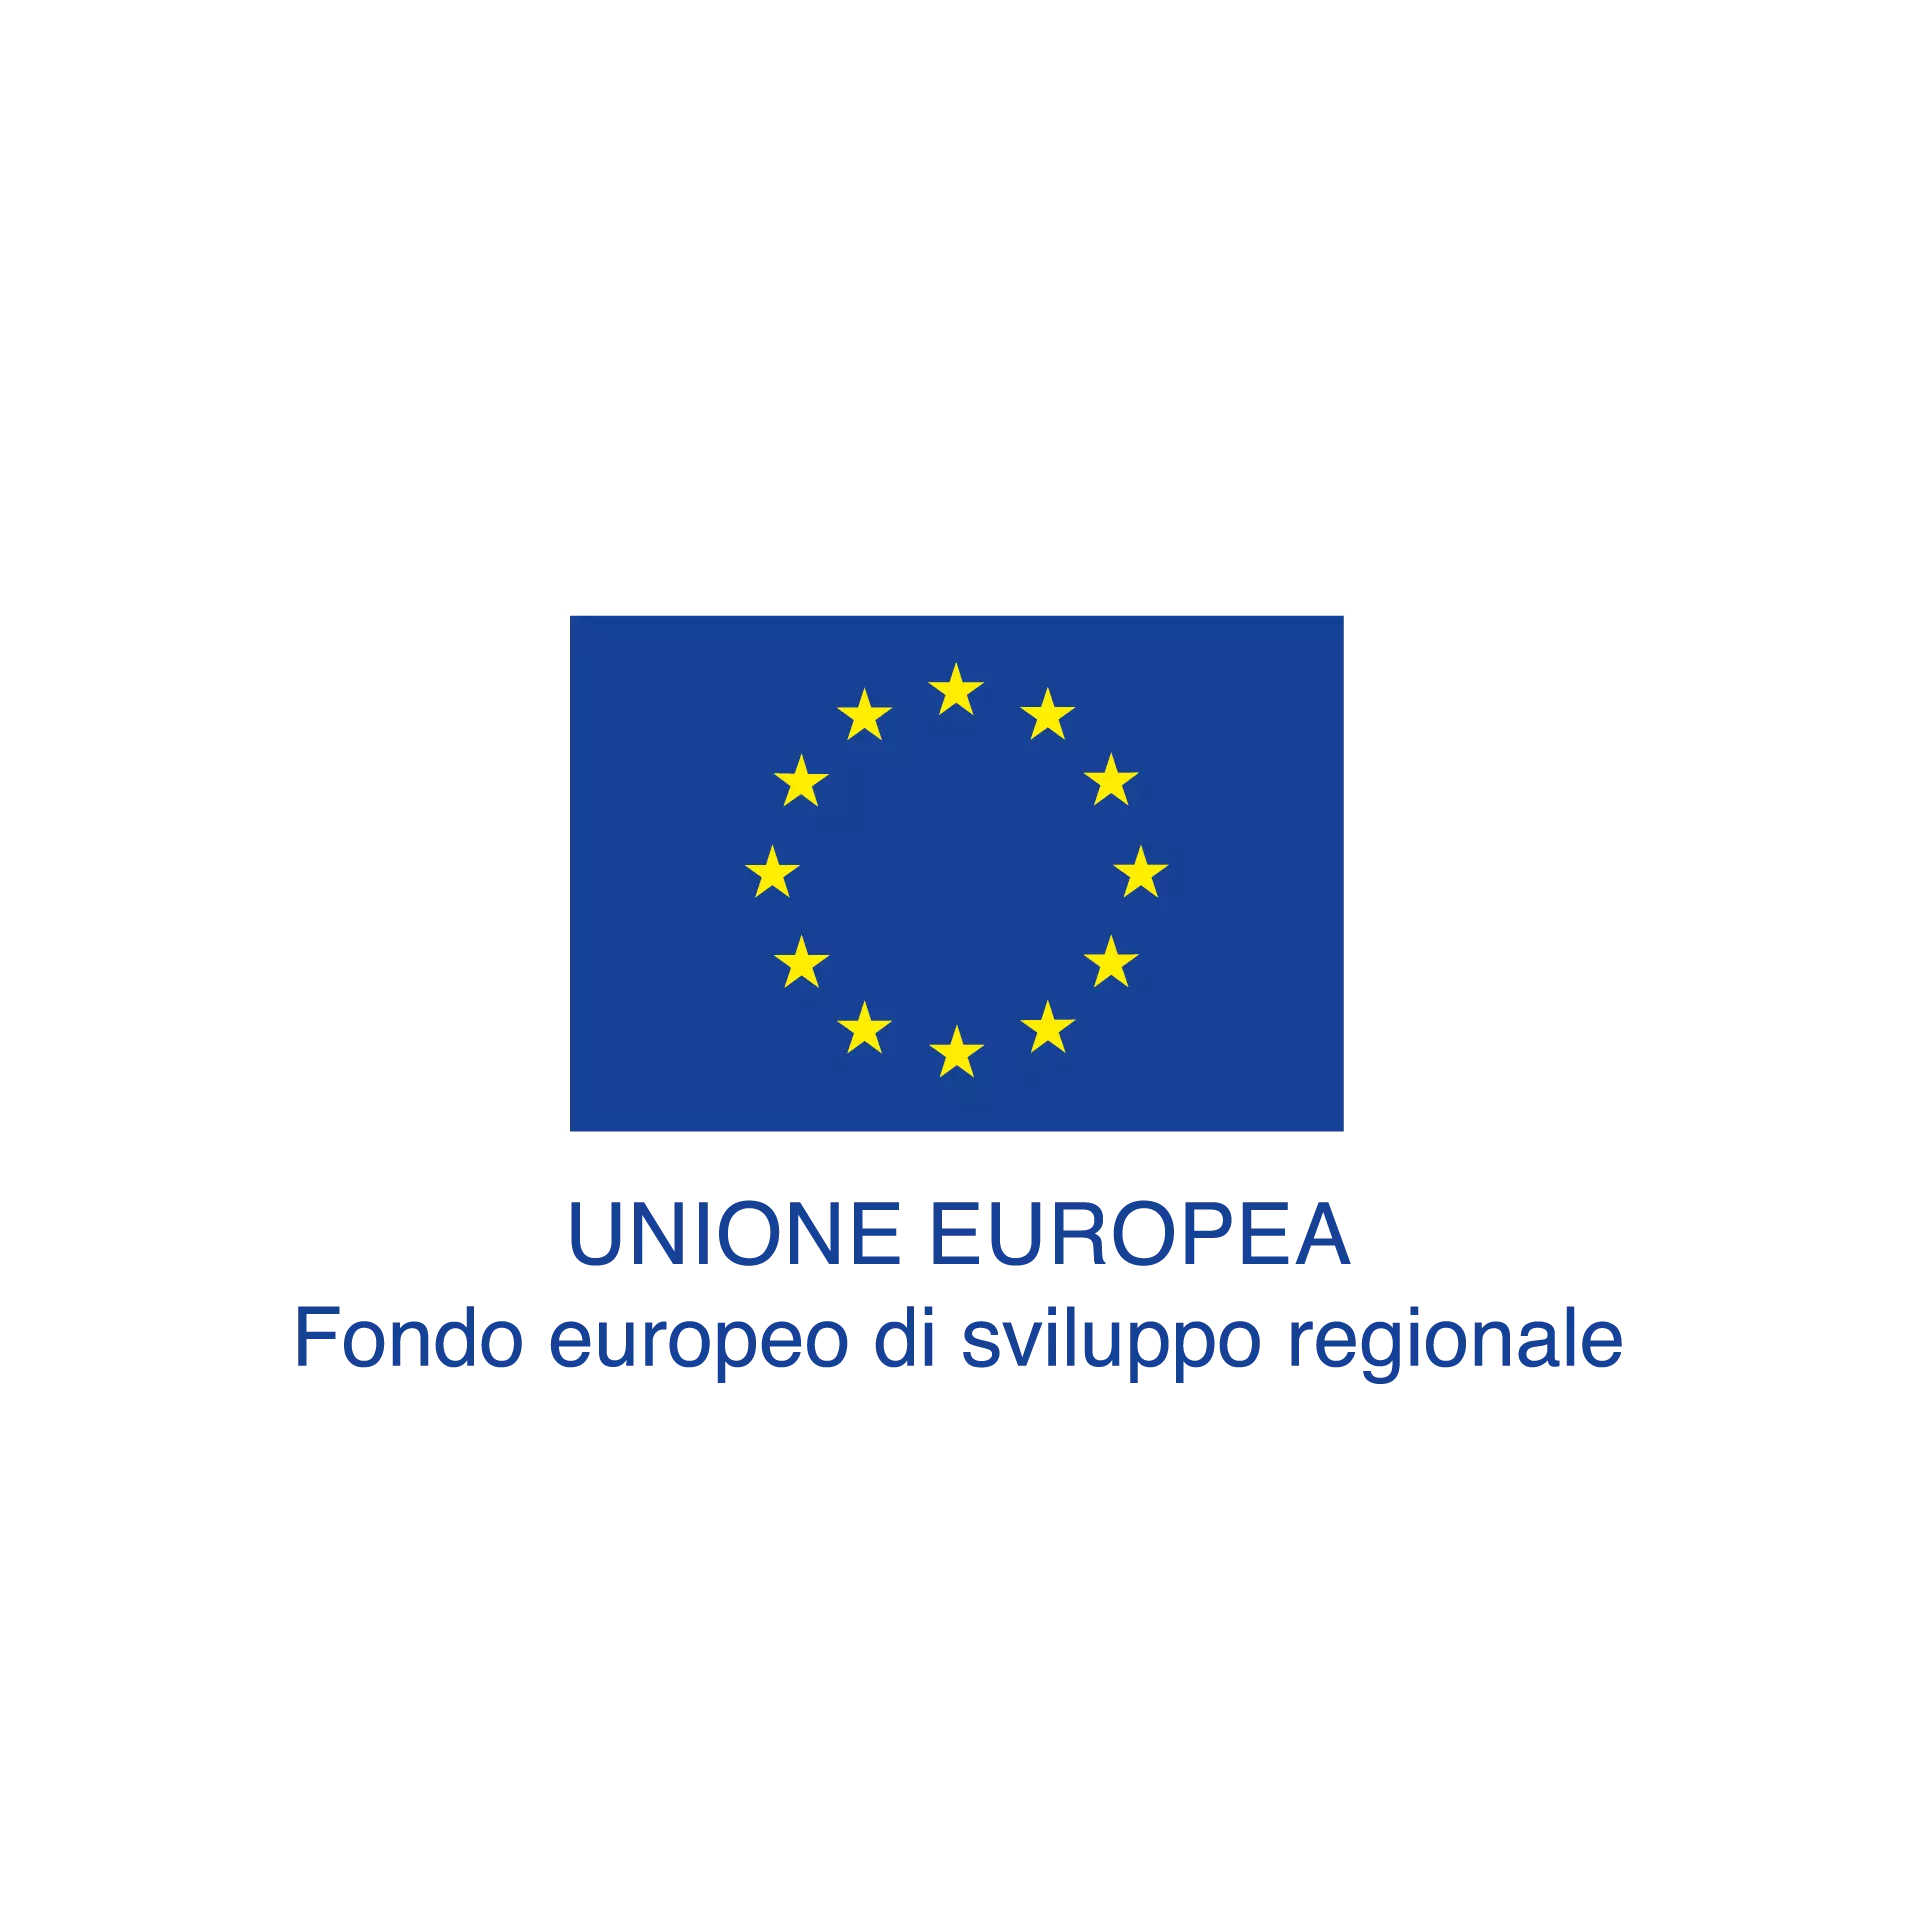 logo unione europea home widata